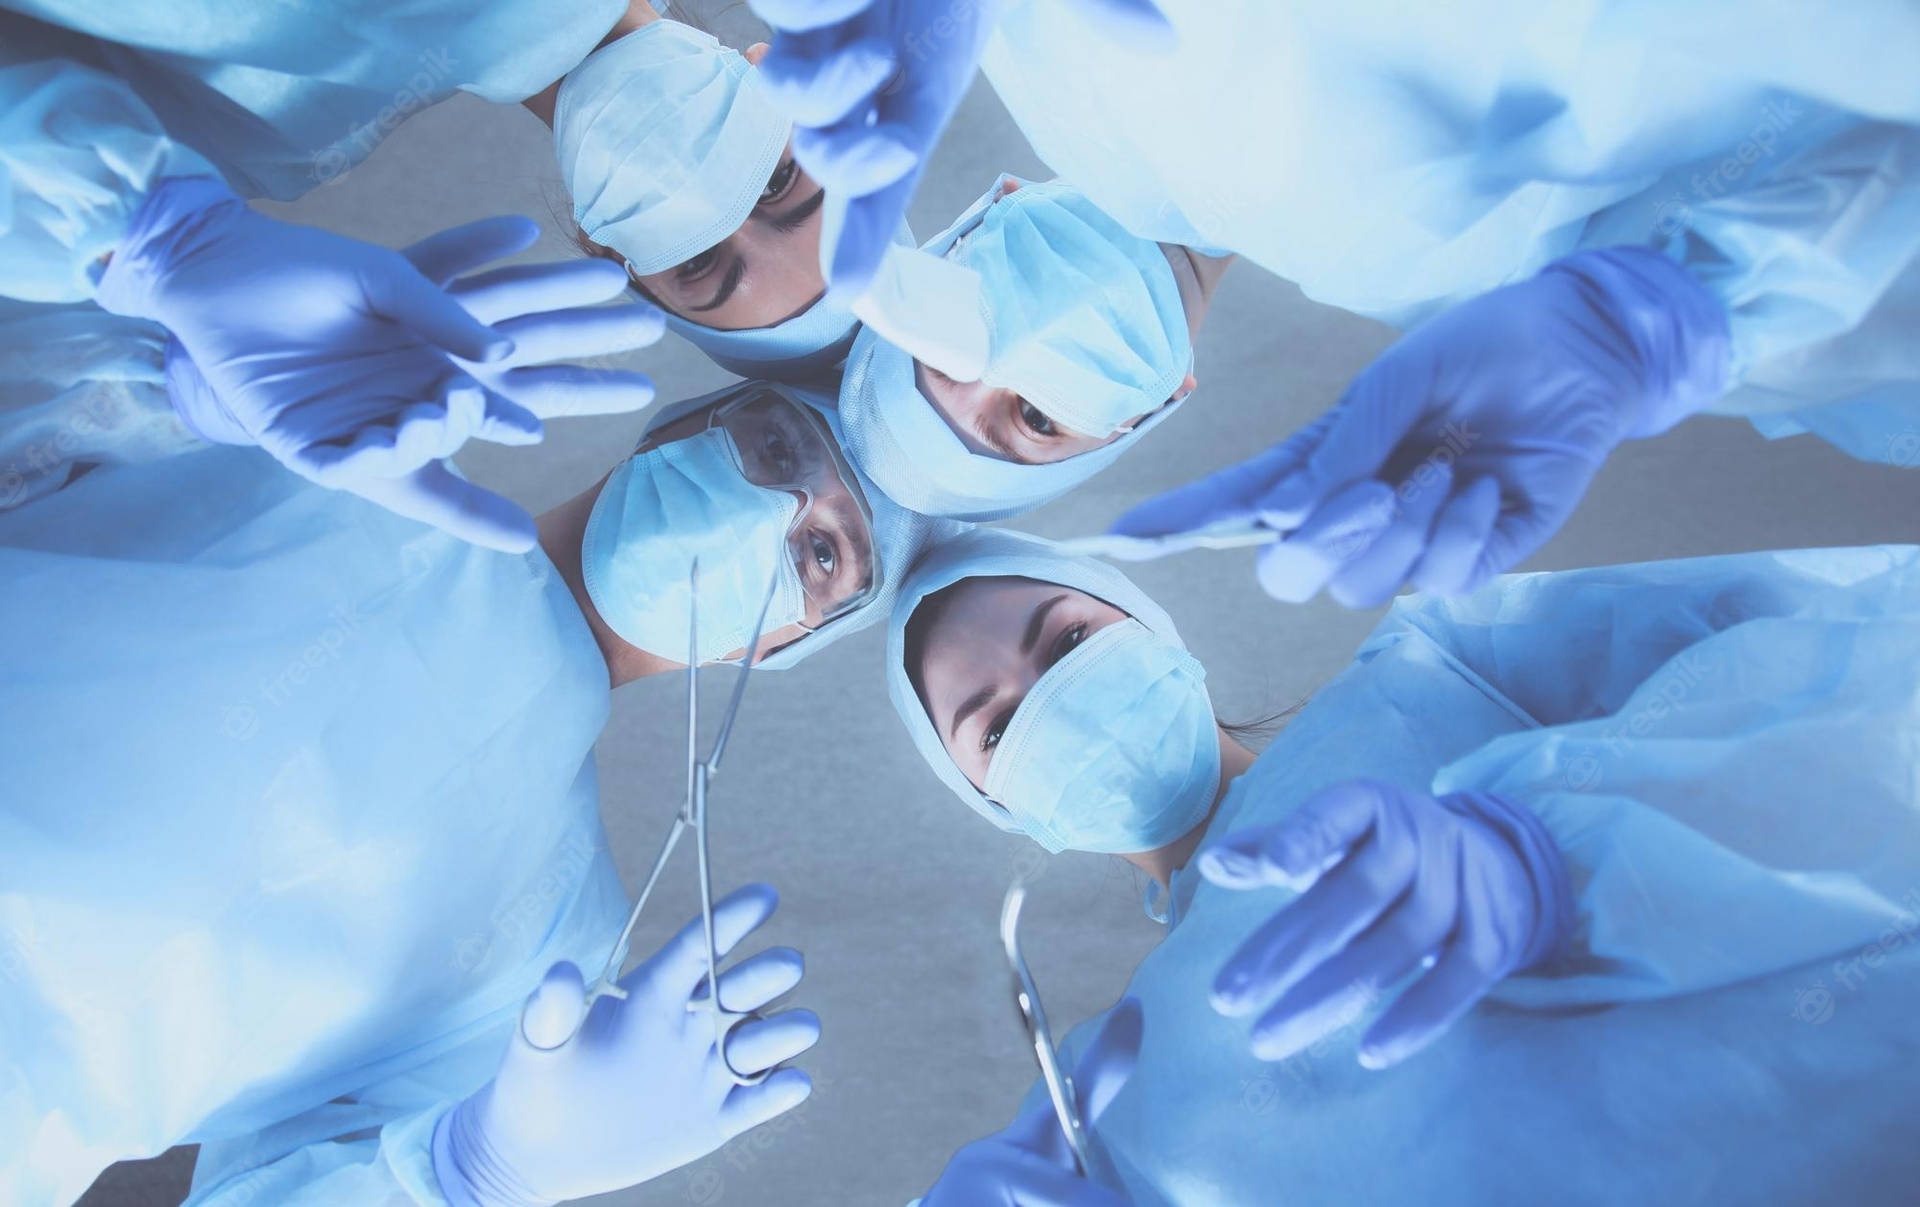 POV Medical Procedure - Surgeon in Operation Wallpaper